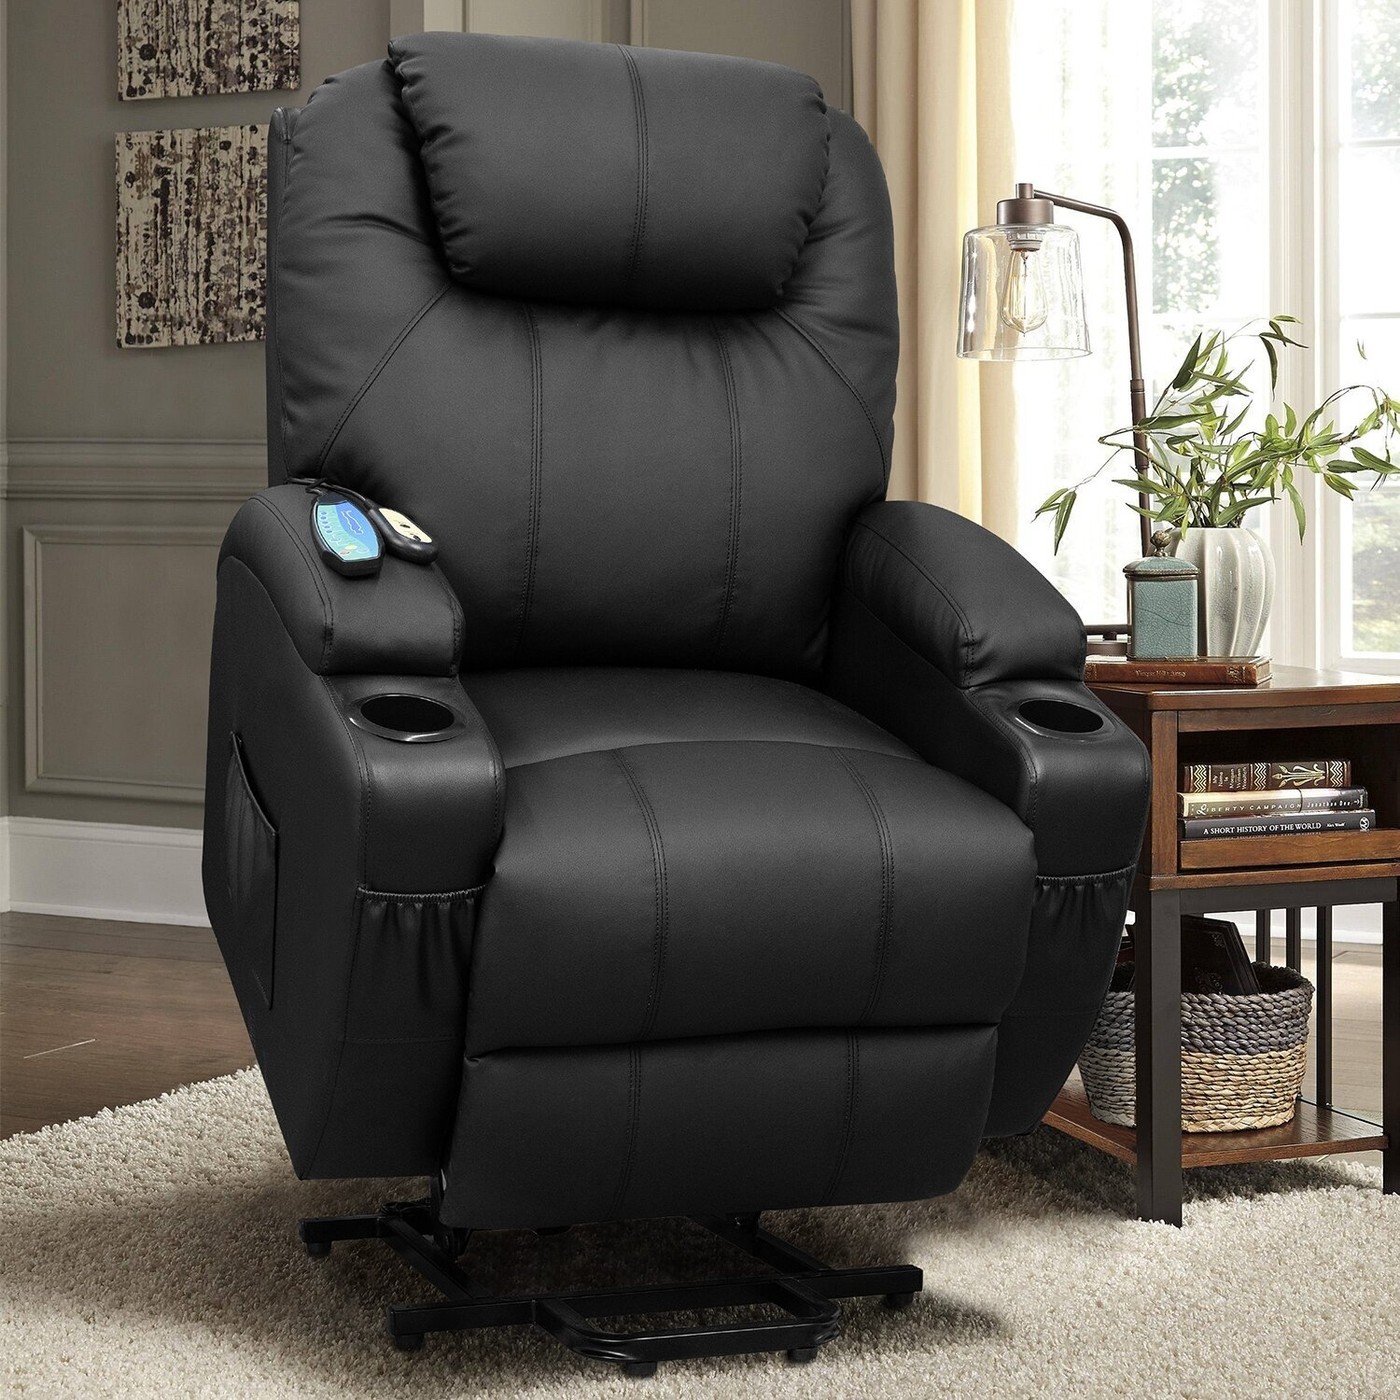 https://visualhunt.com/photos/16/ergonomic-lift-assist-full-body-massage-chair.jpeg